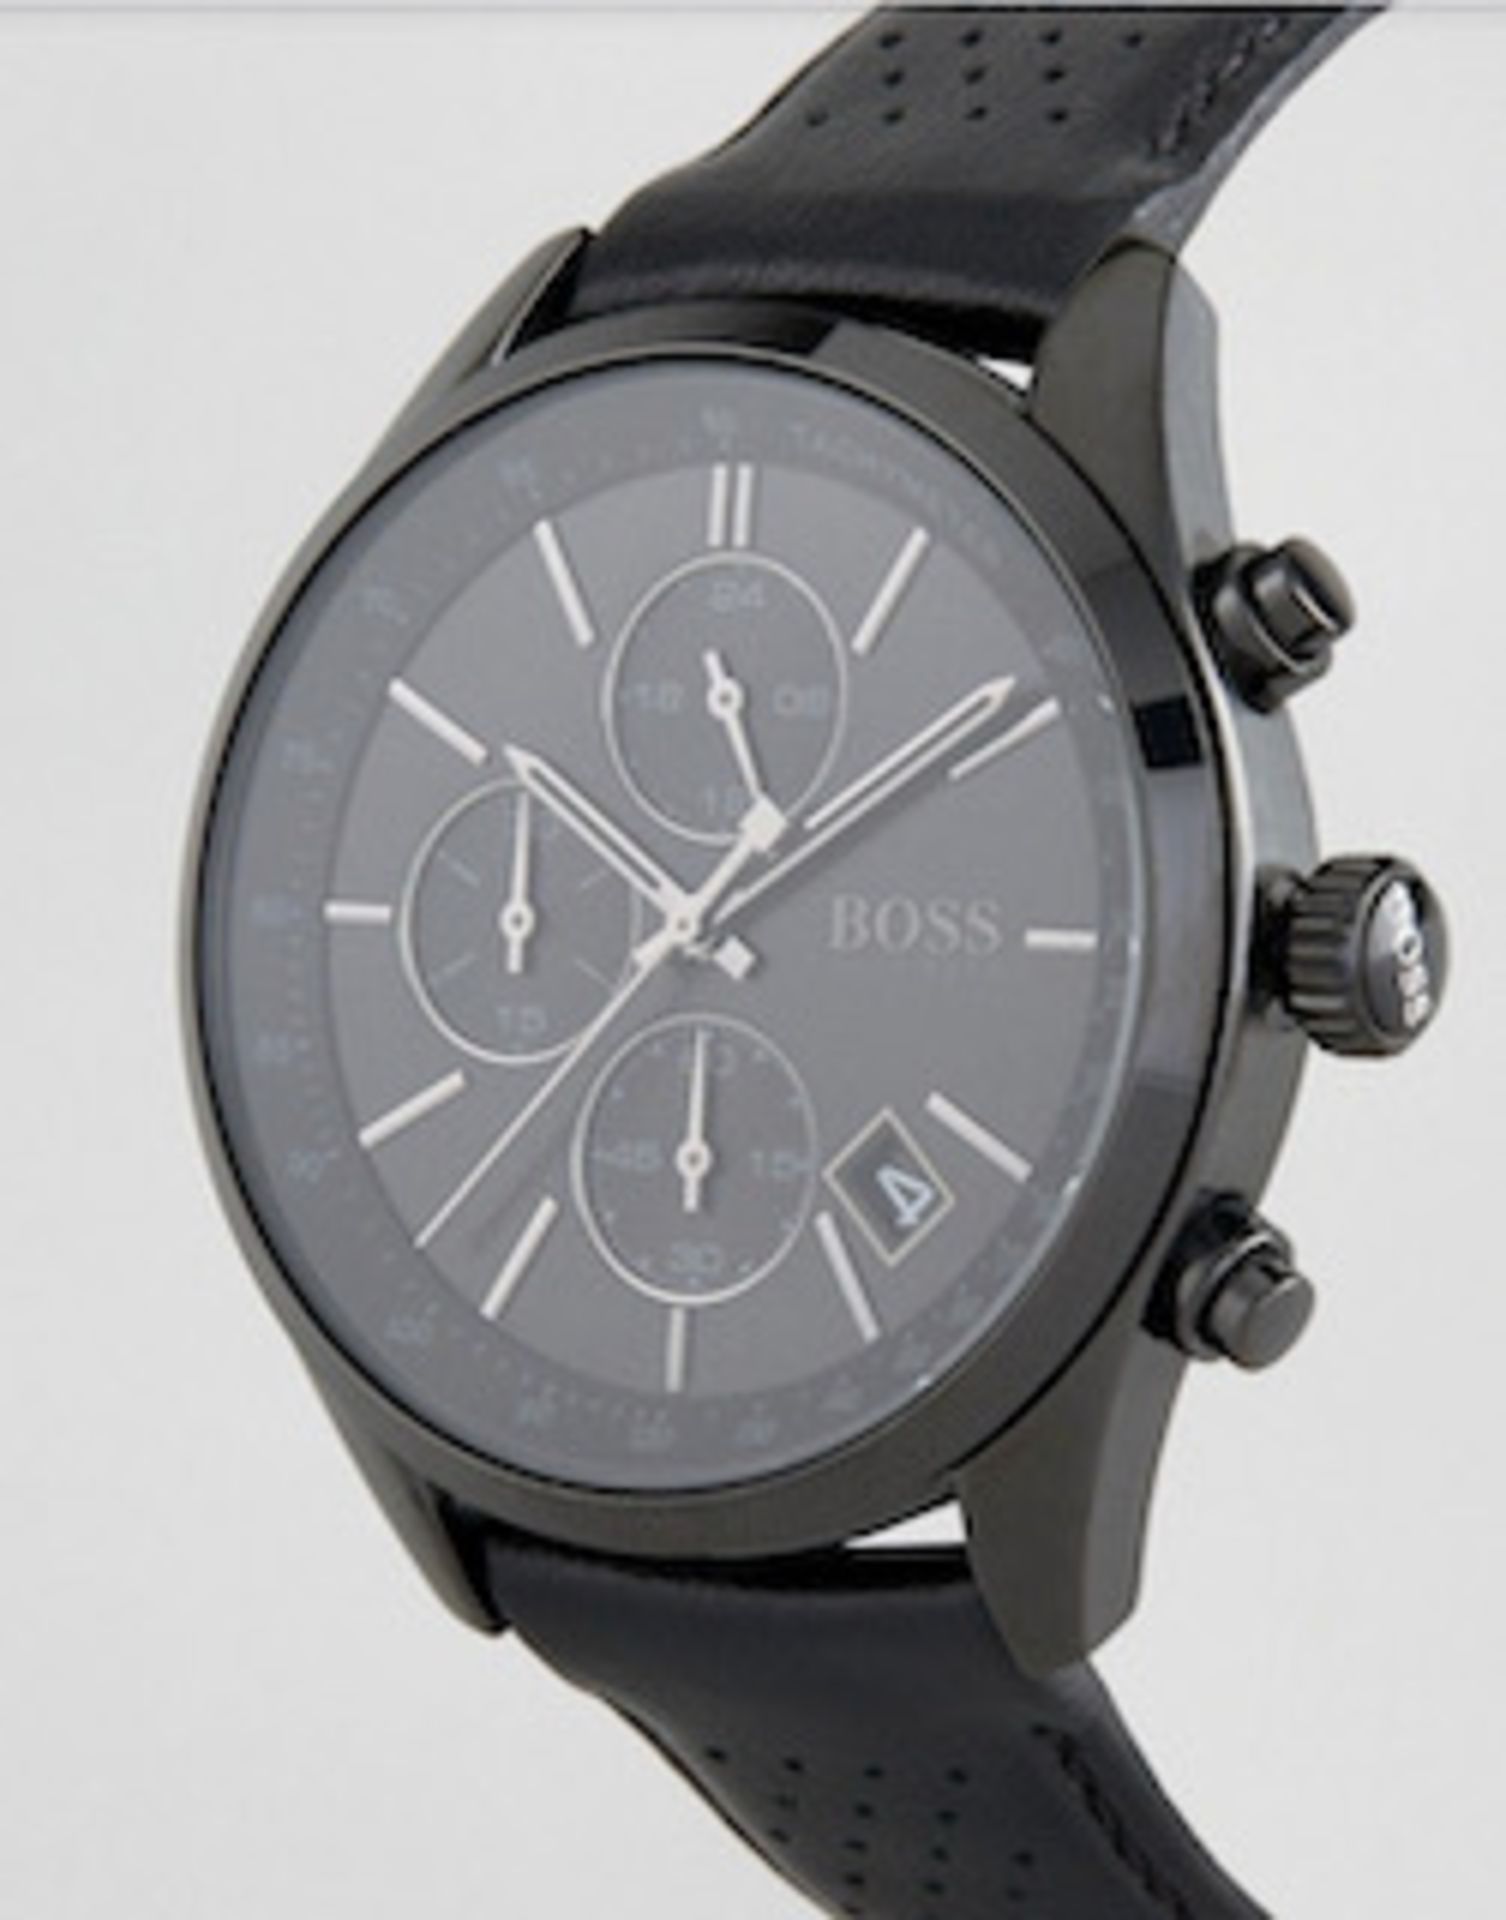 Hugo Boss 1513474 Men's Grand Prix Black Dial Black Leather Strap Chronograph Watch - Image 4 of 5